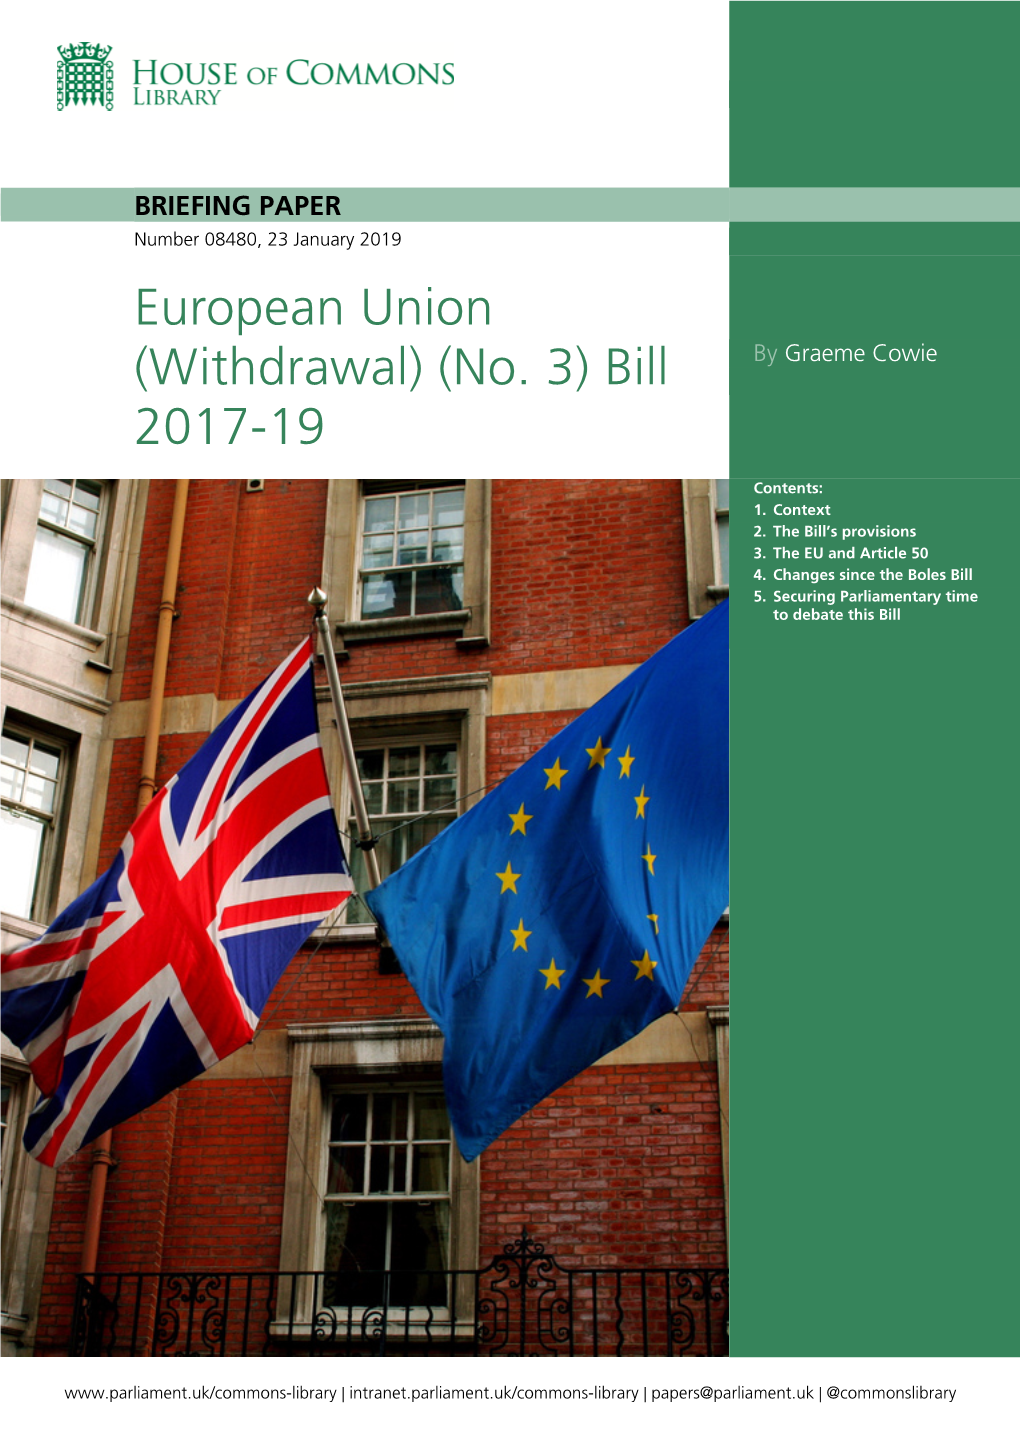 European Union (Withdrawal) (No. 3) Bill 2017-19